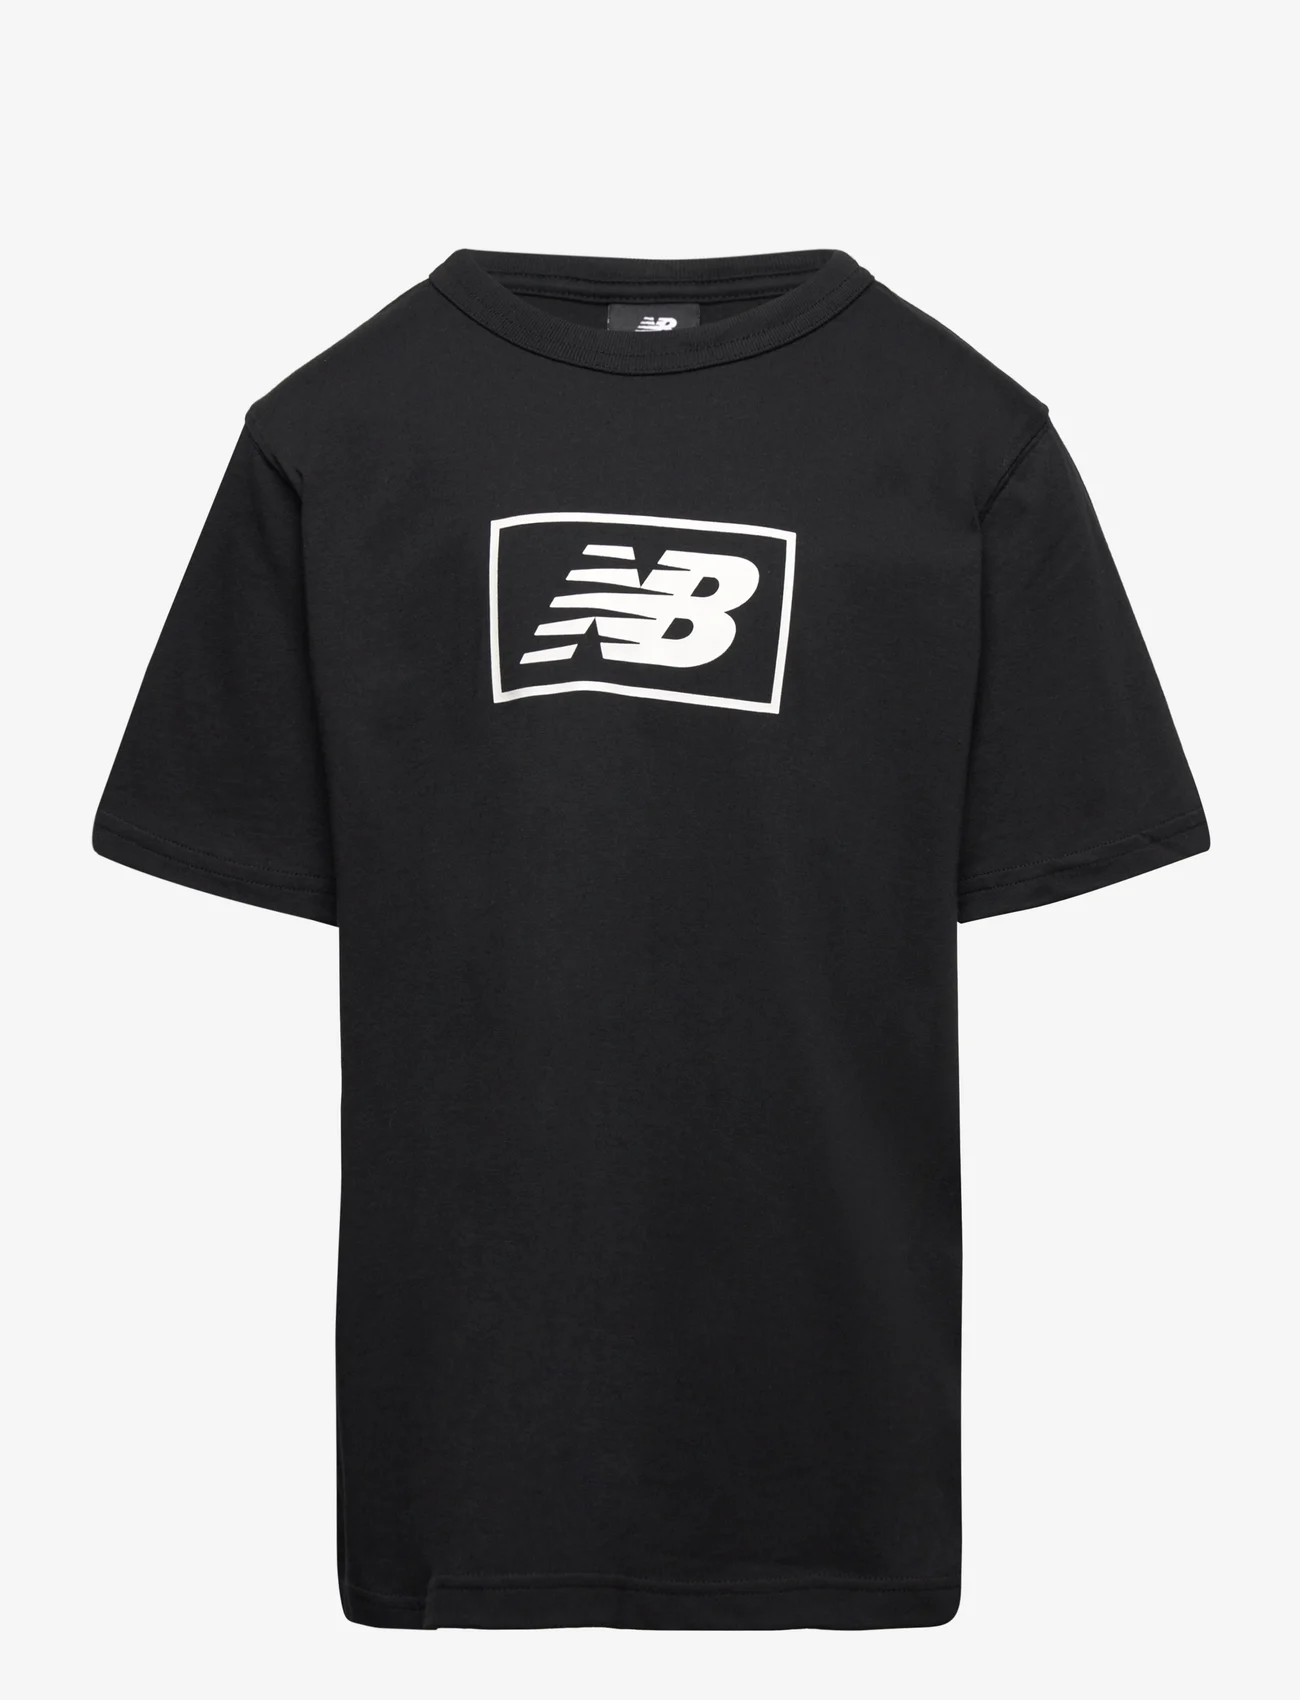 New Balance - NB Essentials Logo Tee - kortärmade t-shirts - black - 0